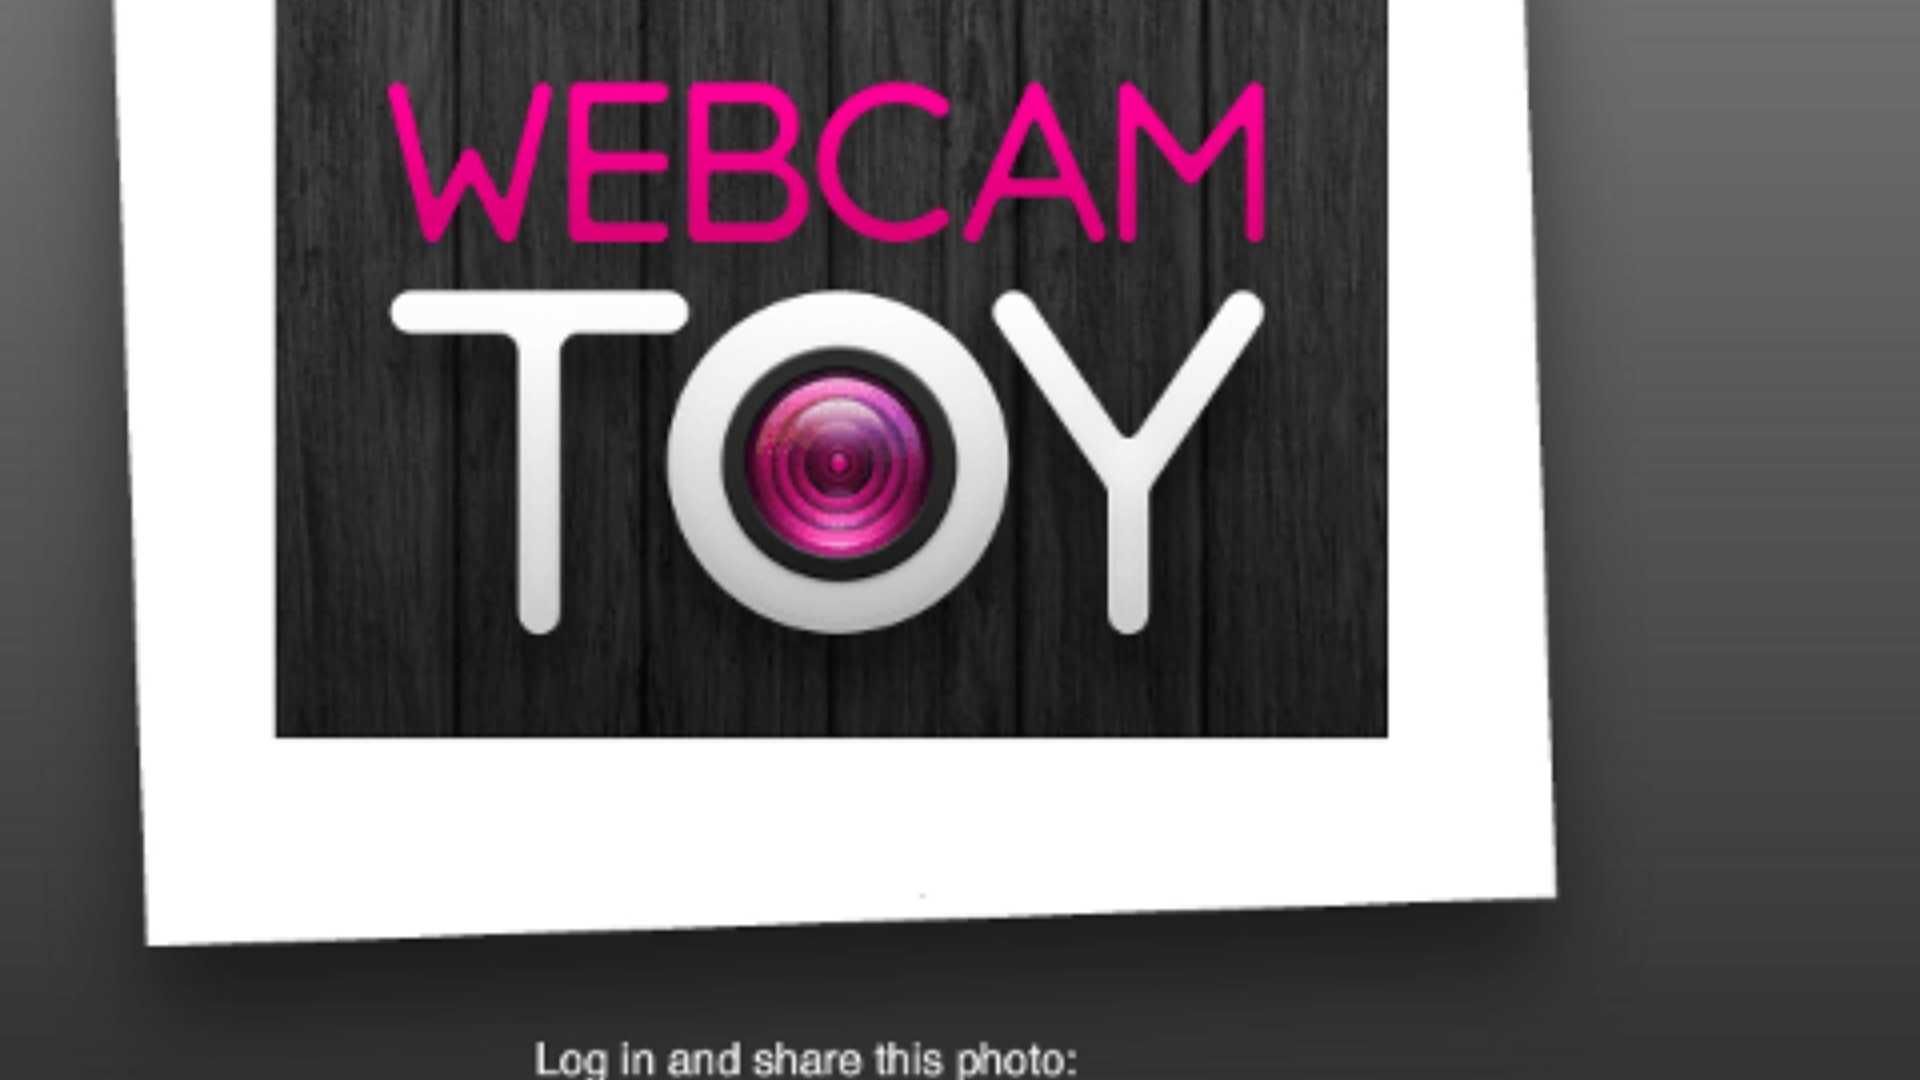 Cara Install Aplikasi Webcam Toy Android